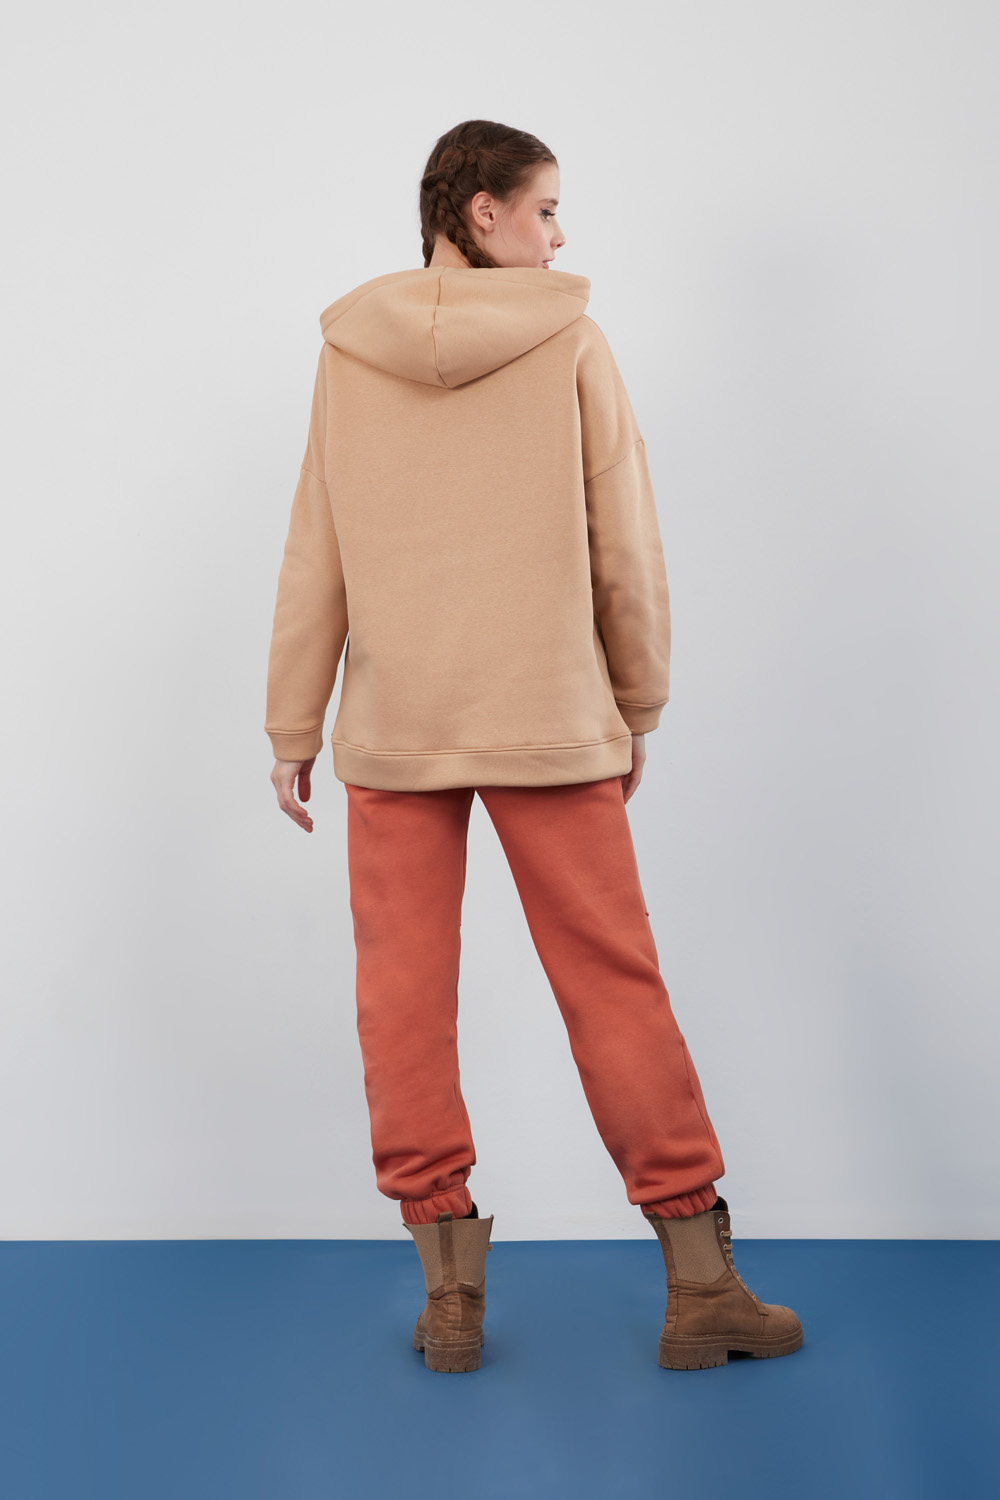 Beige Hooded Winter Sweatshirt with Pockets